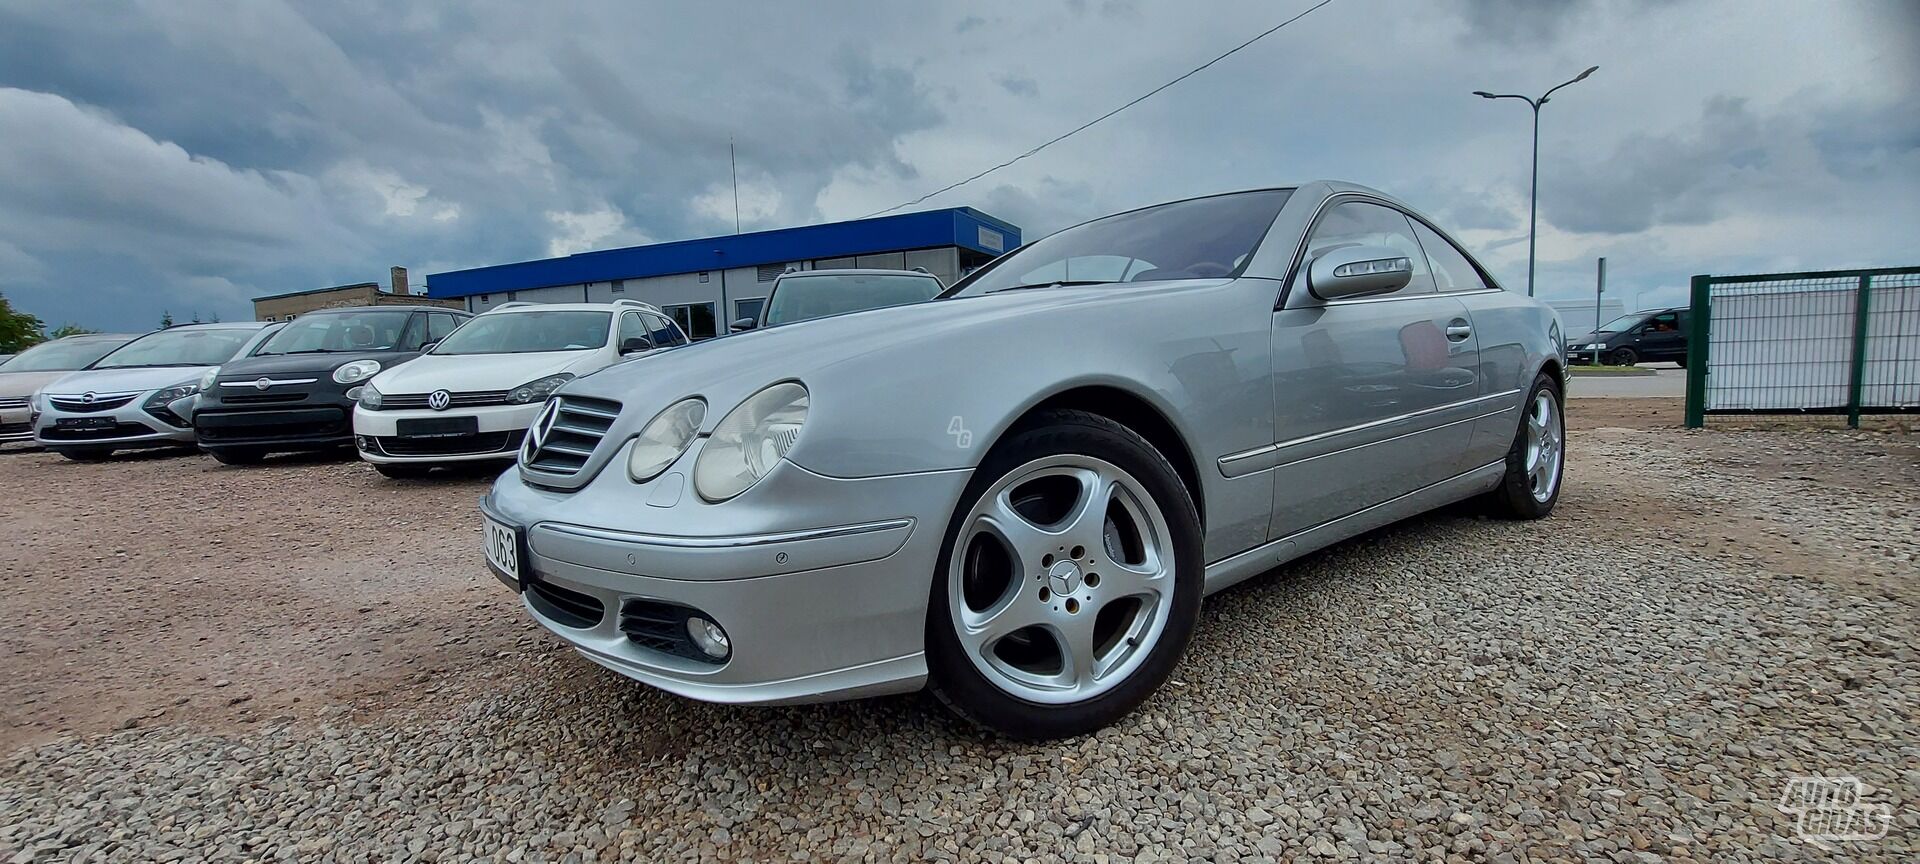 Mercedes-Benz CL 500 2005 m Coupe